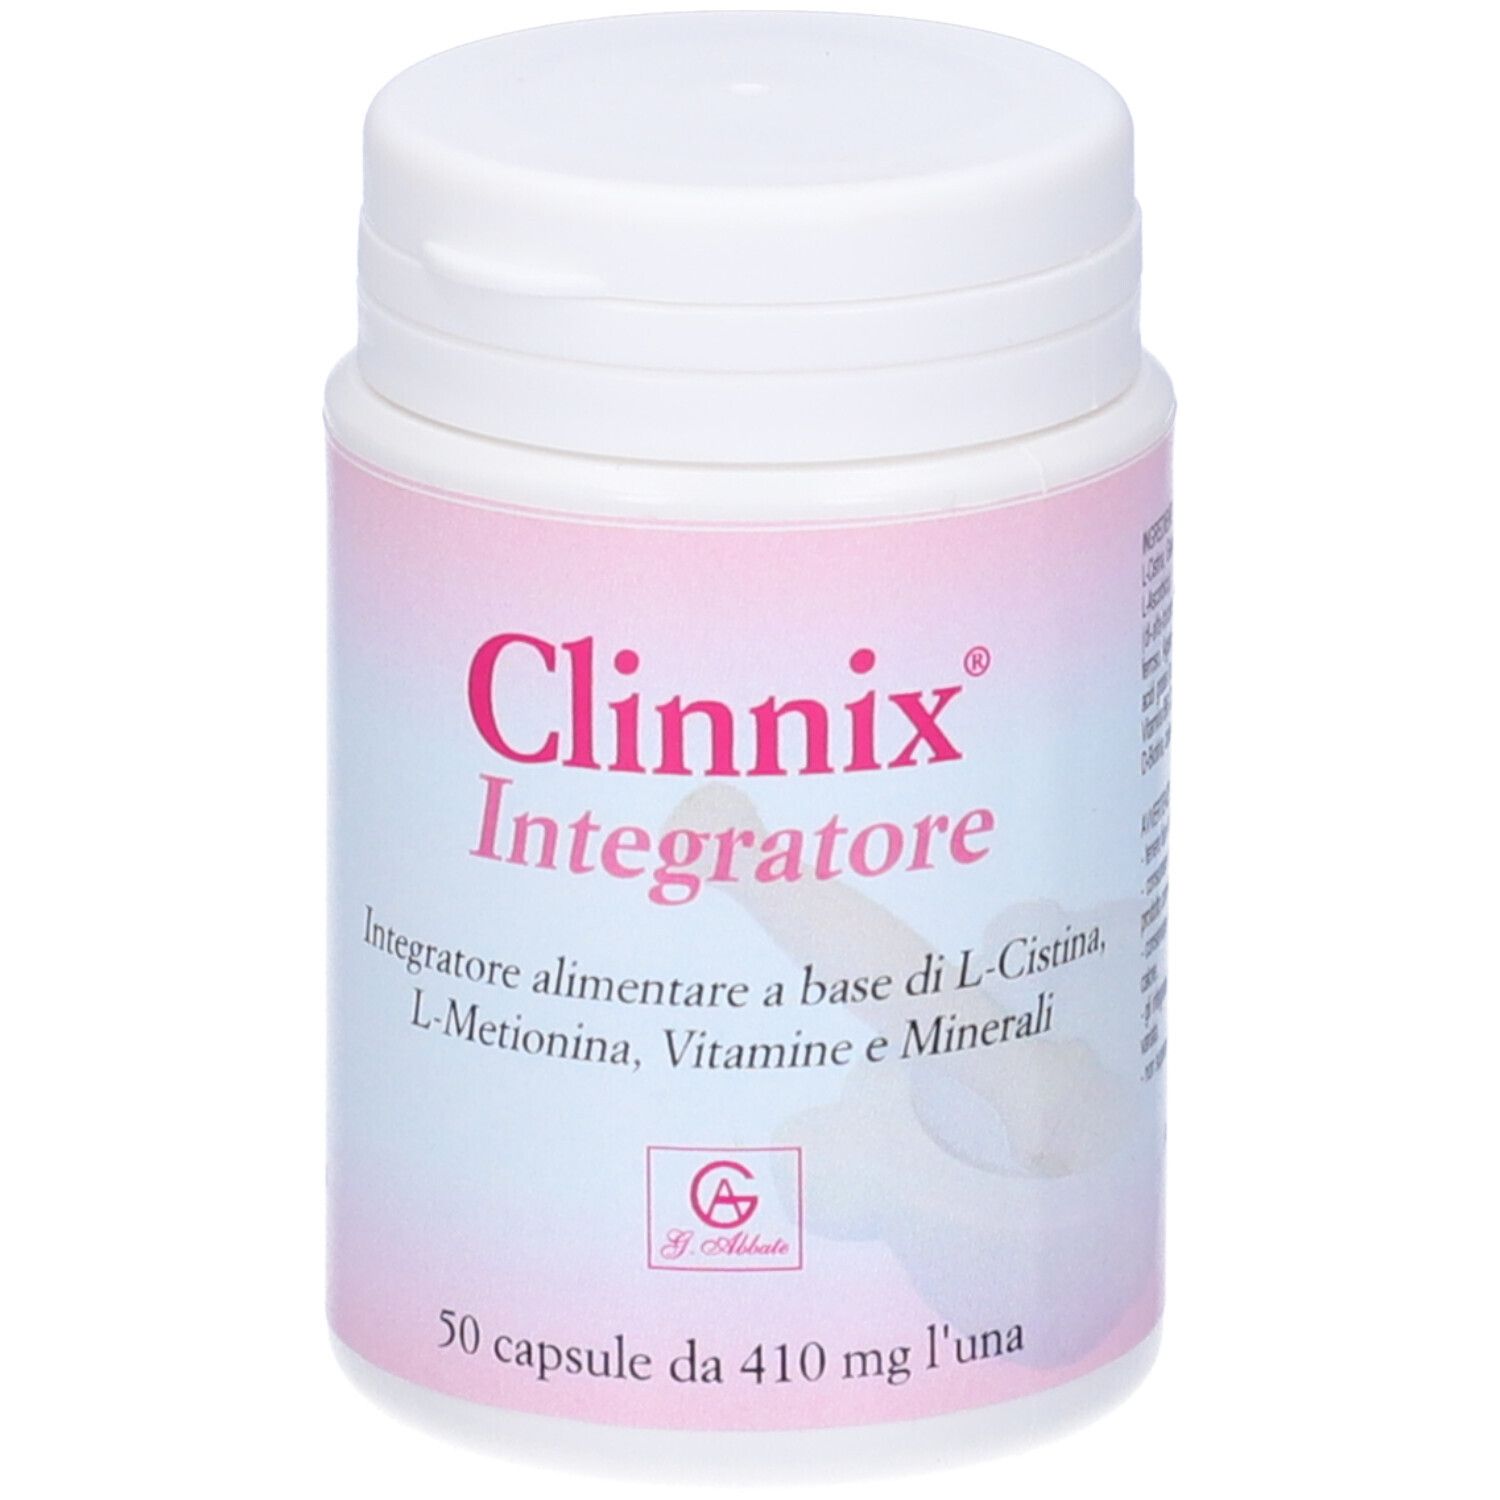 Clinnix Integratore Capsule